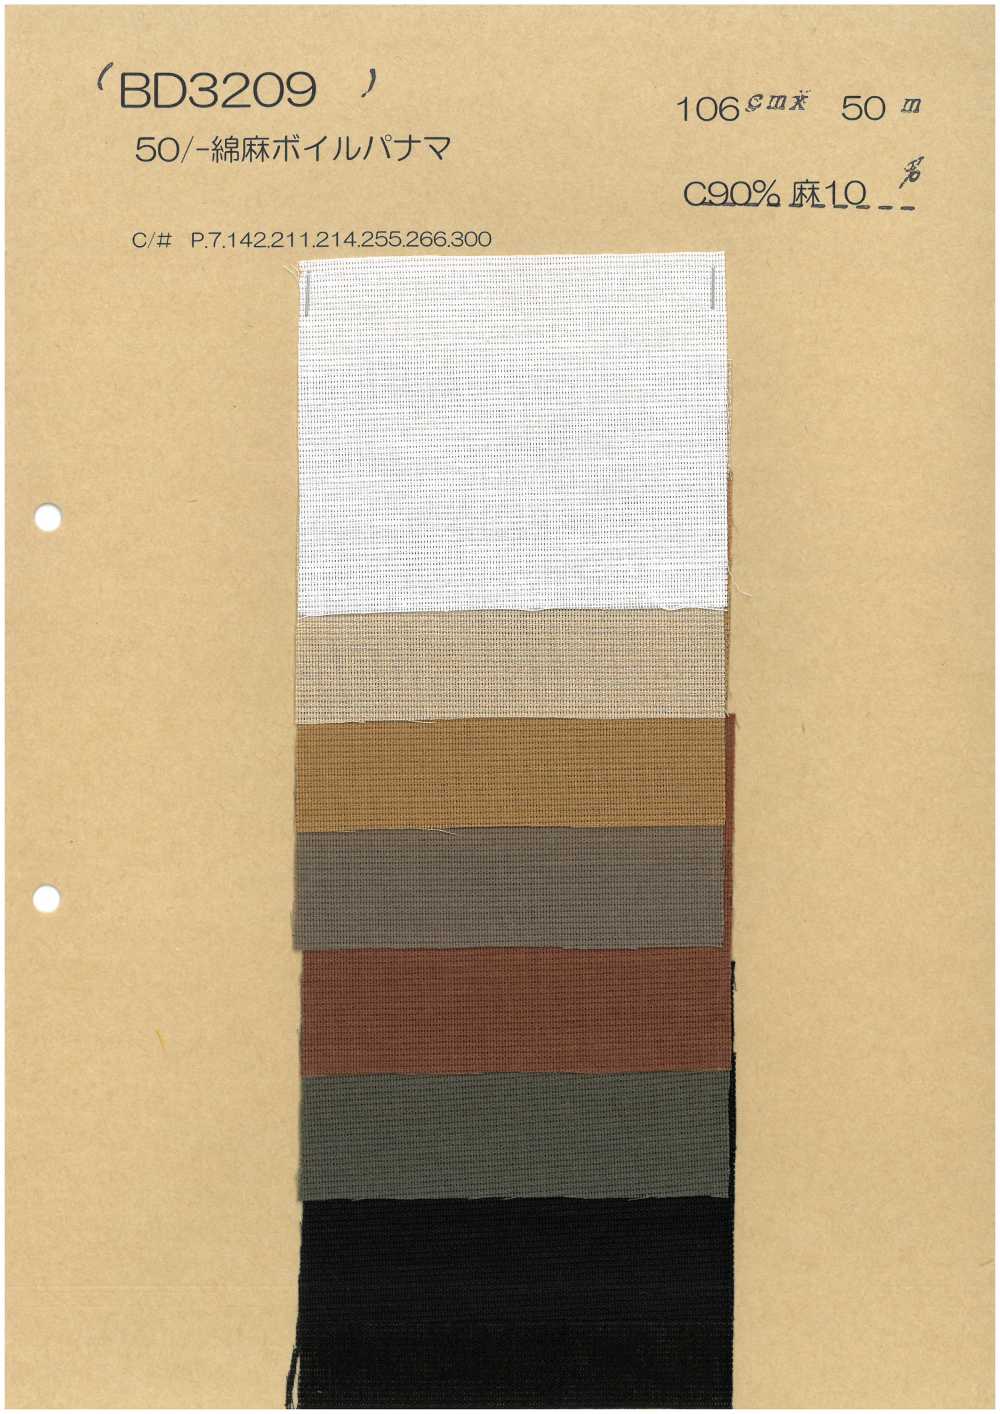 BD3209 [OUTLET] Panamaboiru De Lino Y Algodón[Fabrica Textil] COSMO TEXTILE